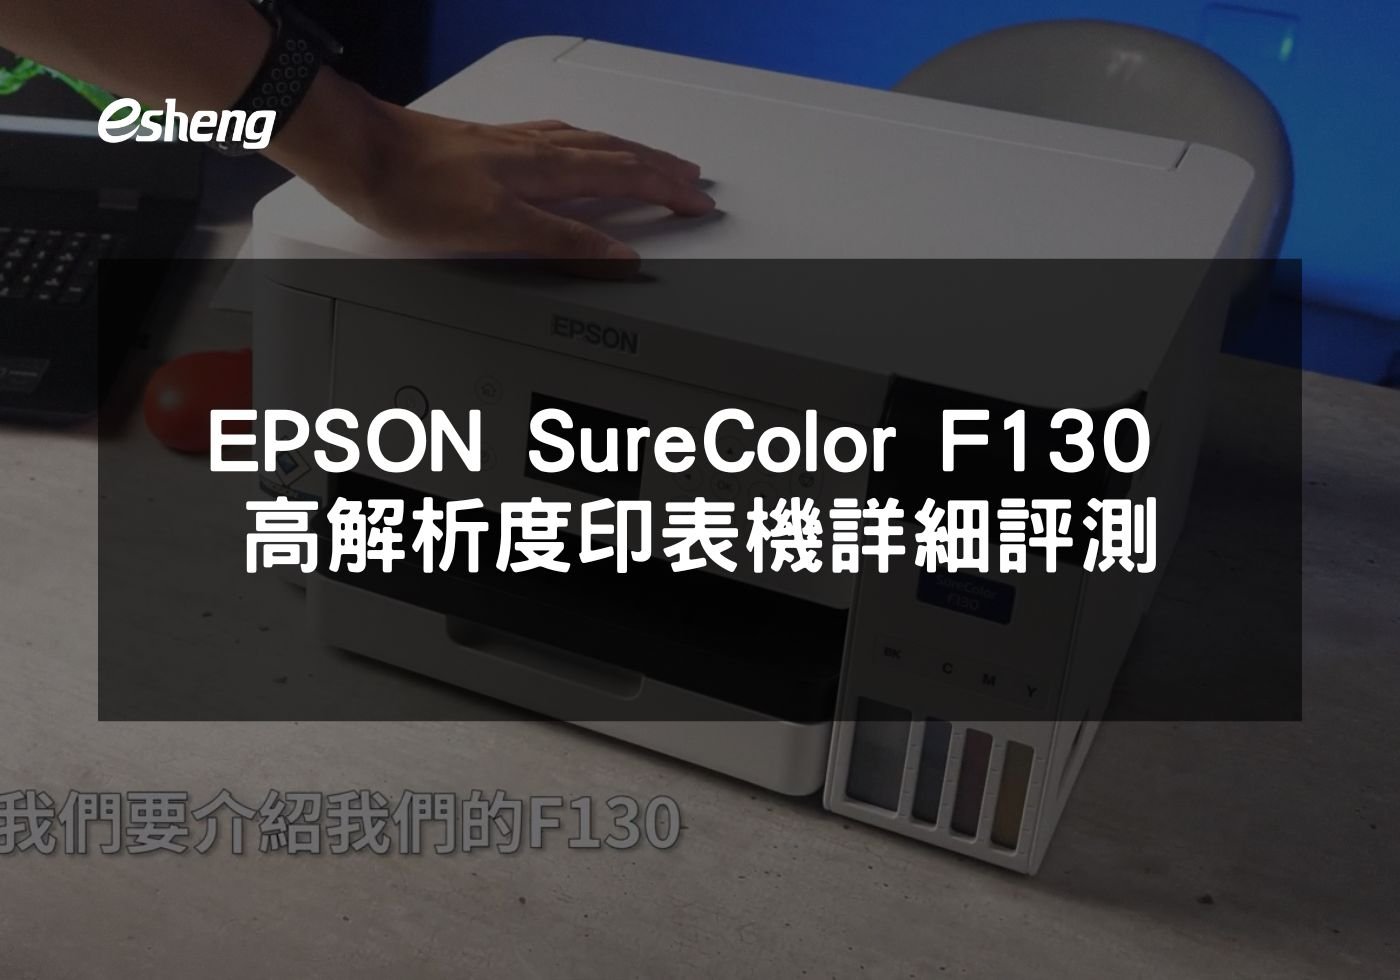 EPSON SureColor F130 高解析度印表機詳細評測